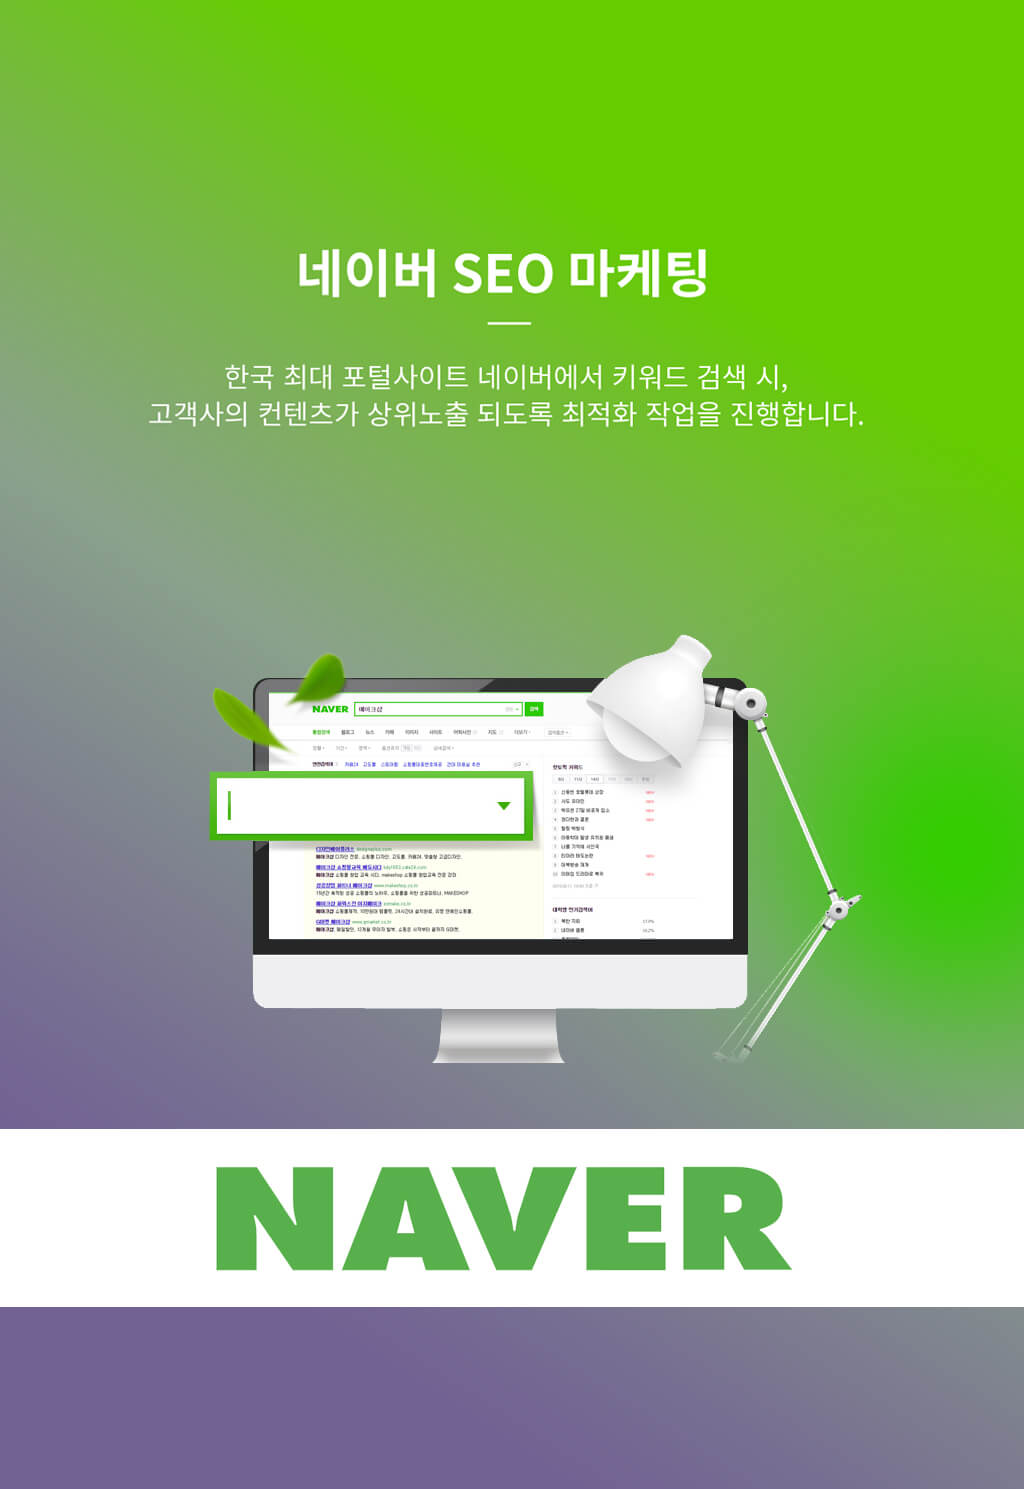 Korean Digital Marketign and Search engine Optimization